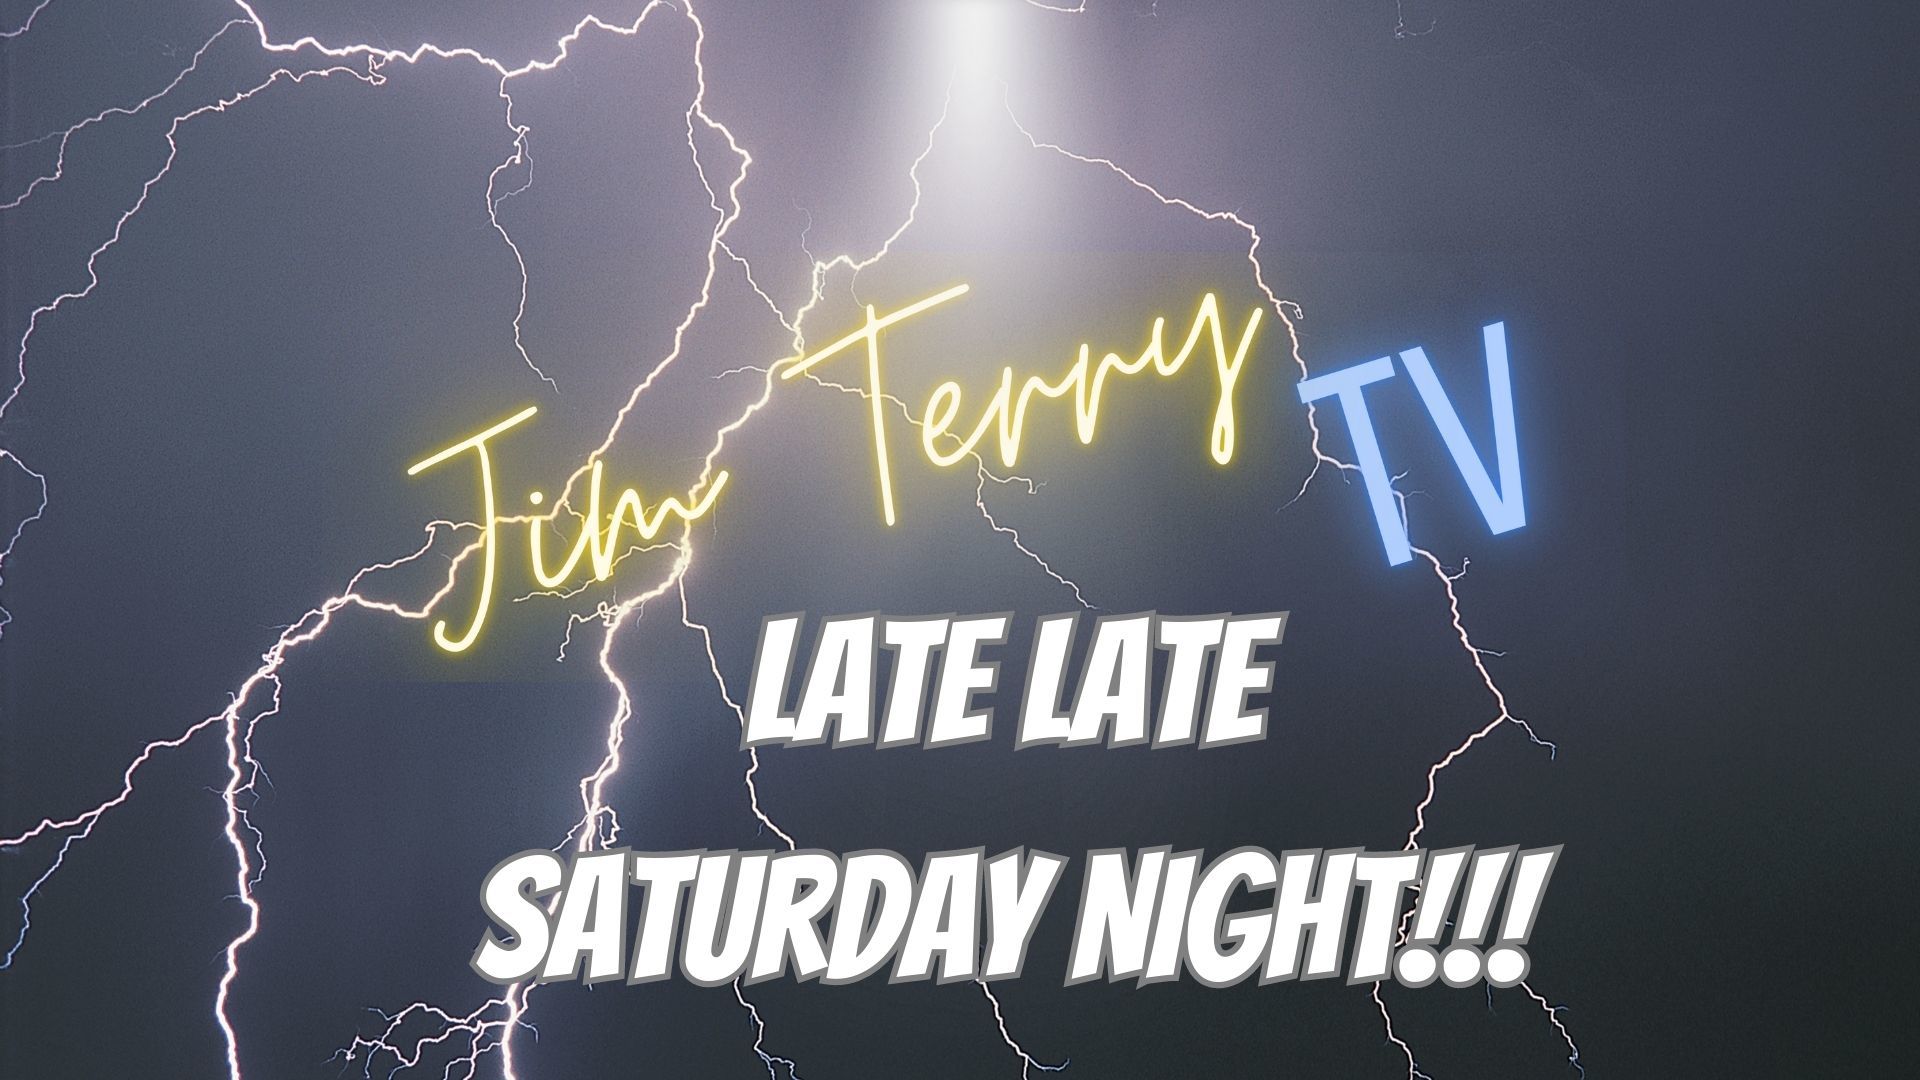 Jim Terry TV:  Late Late Saturday Night